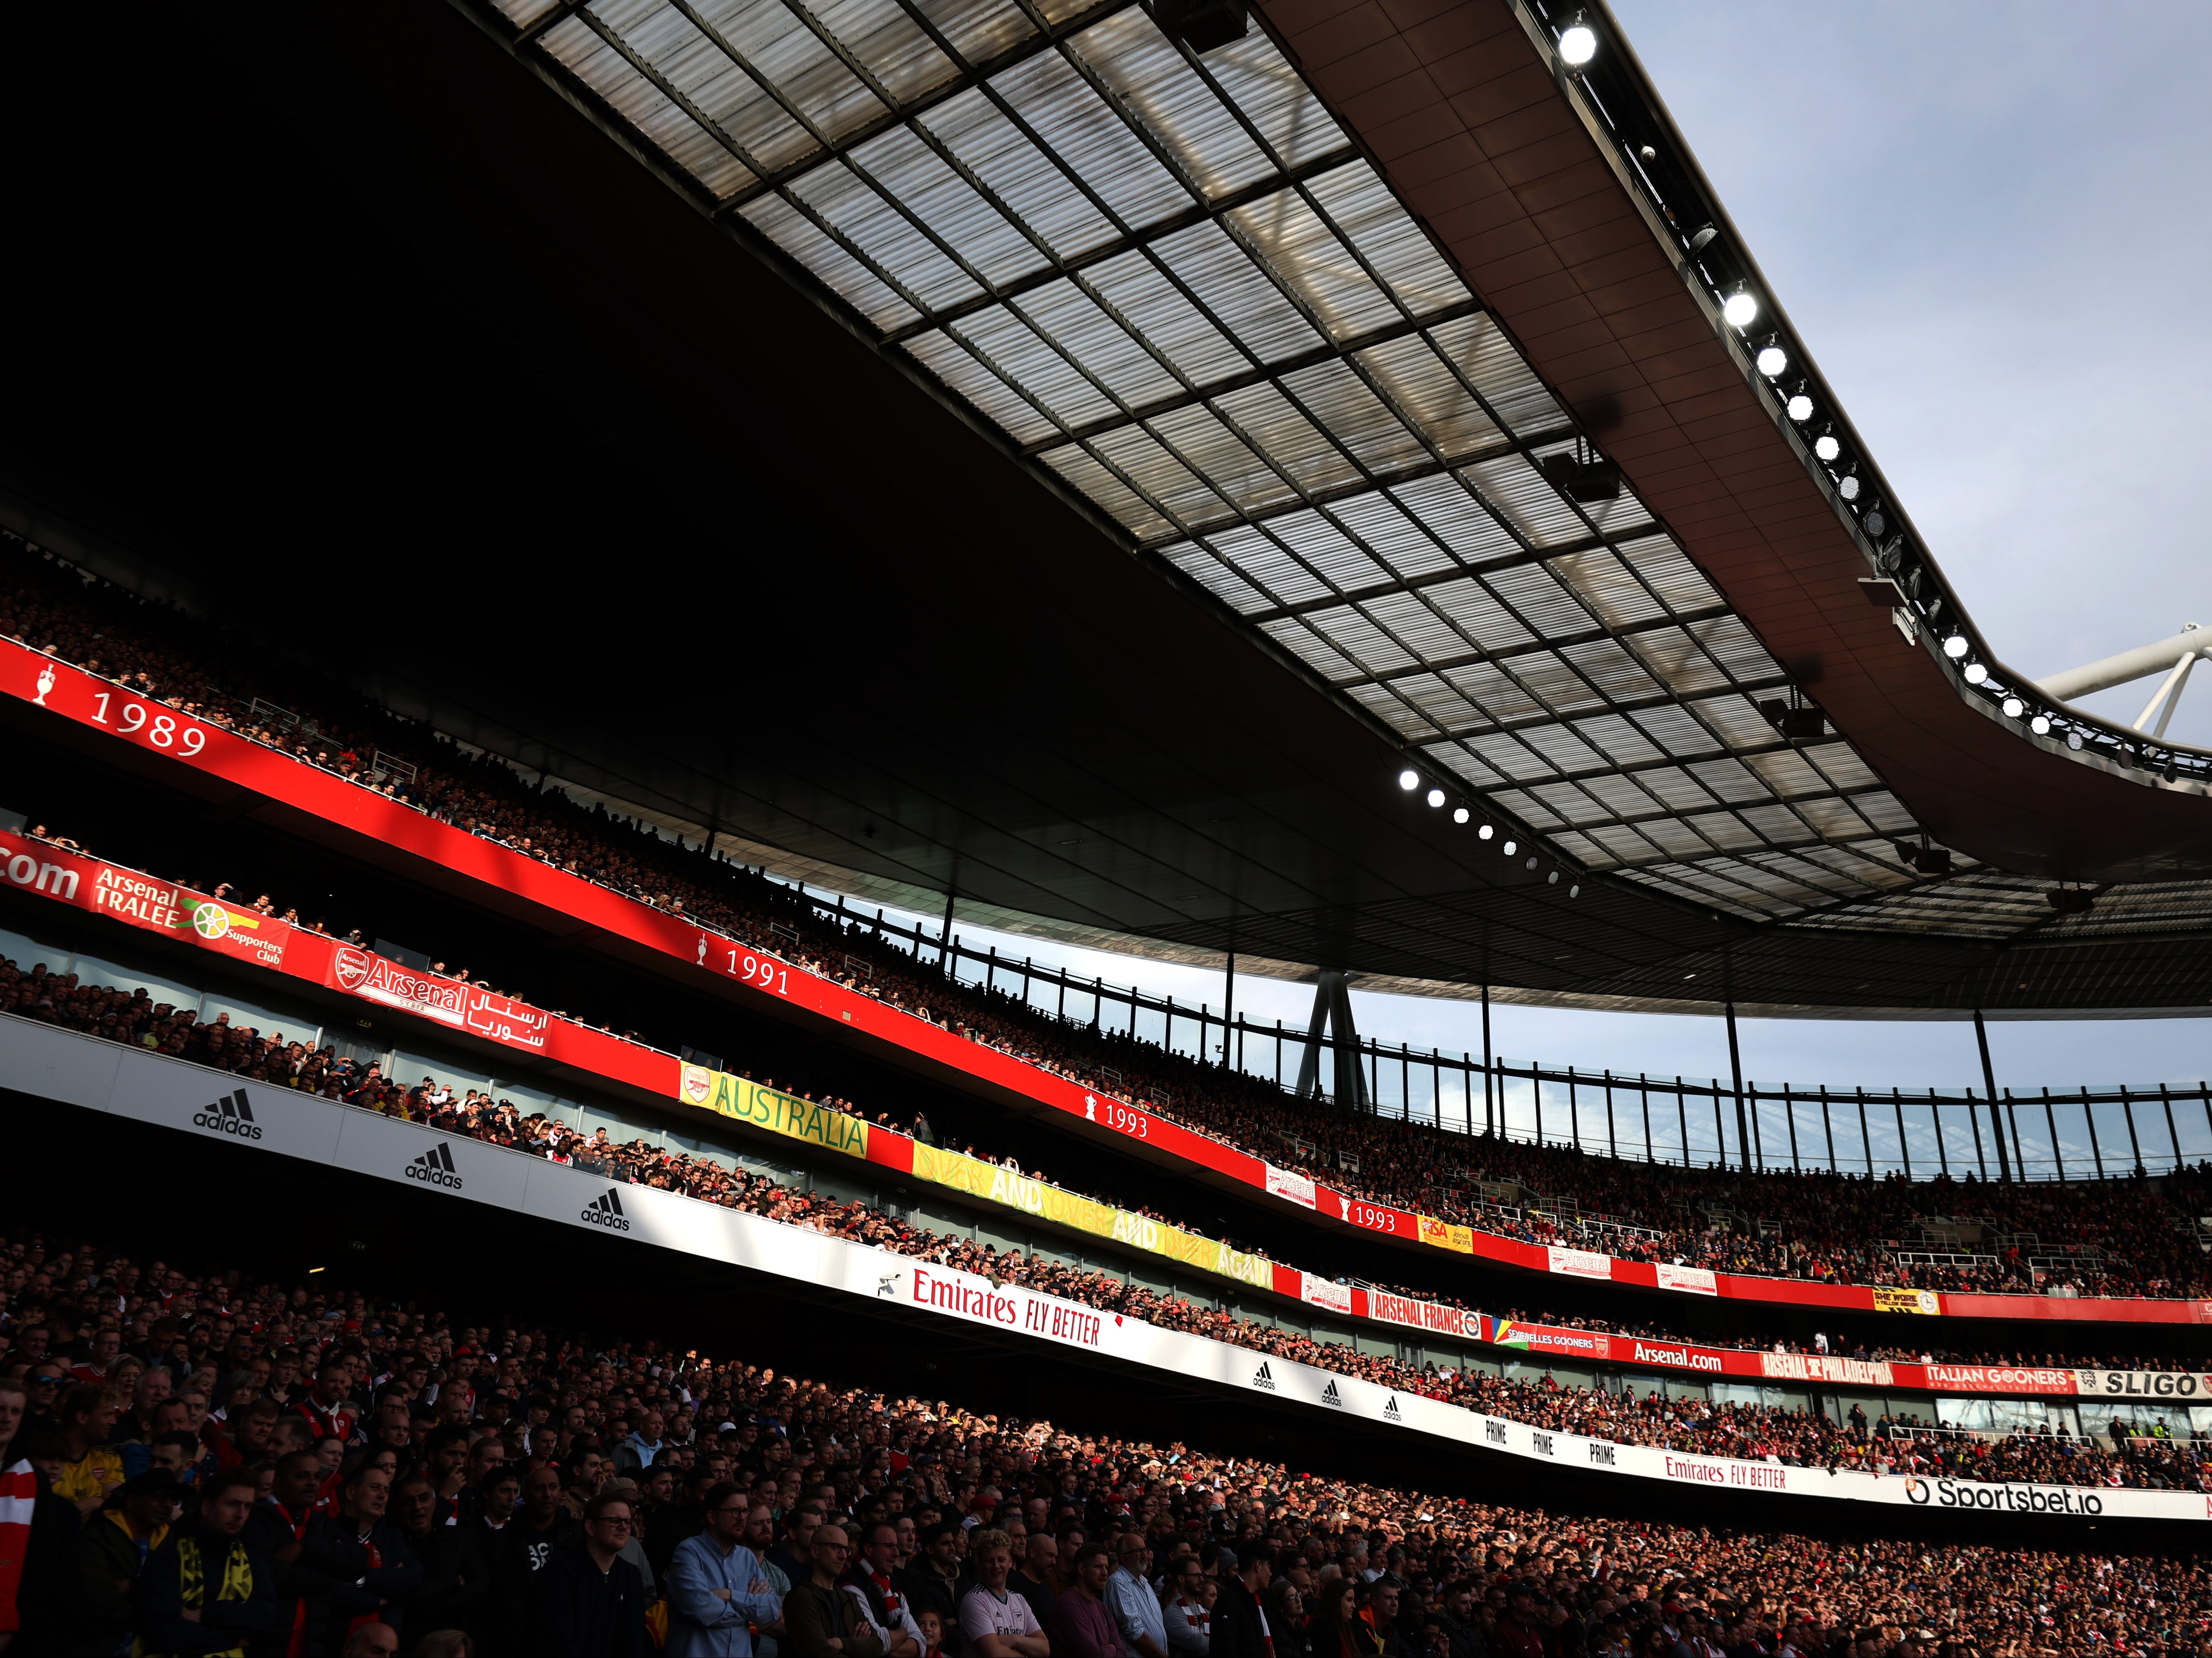 Emirates Stadium, the home of Arsenal